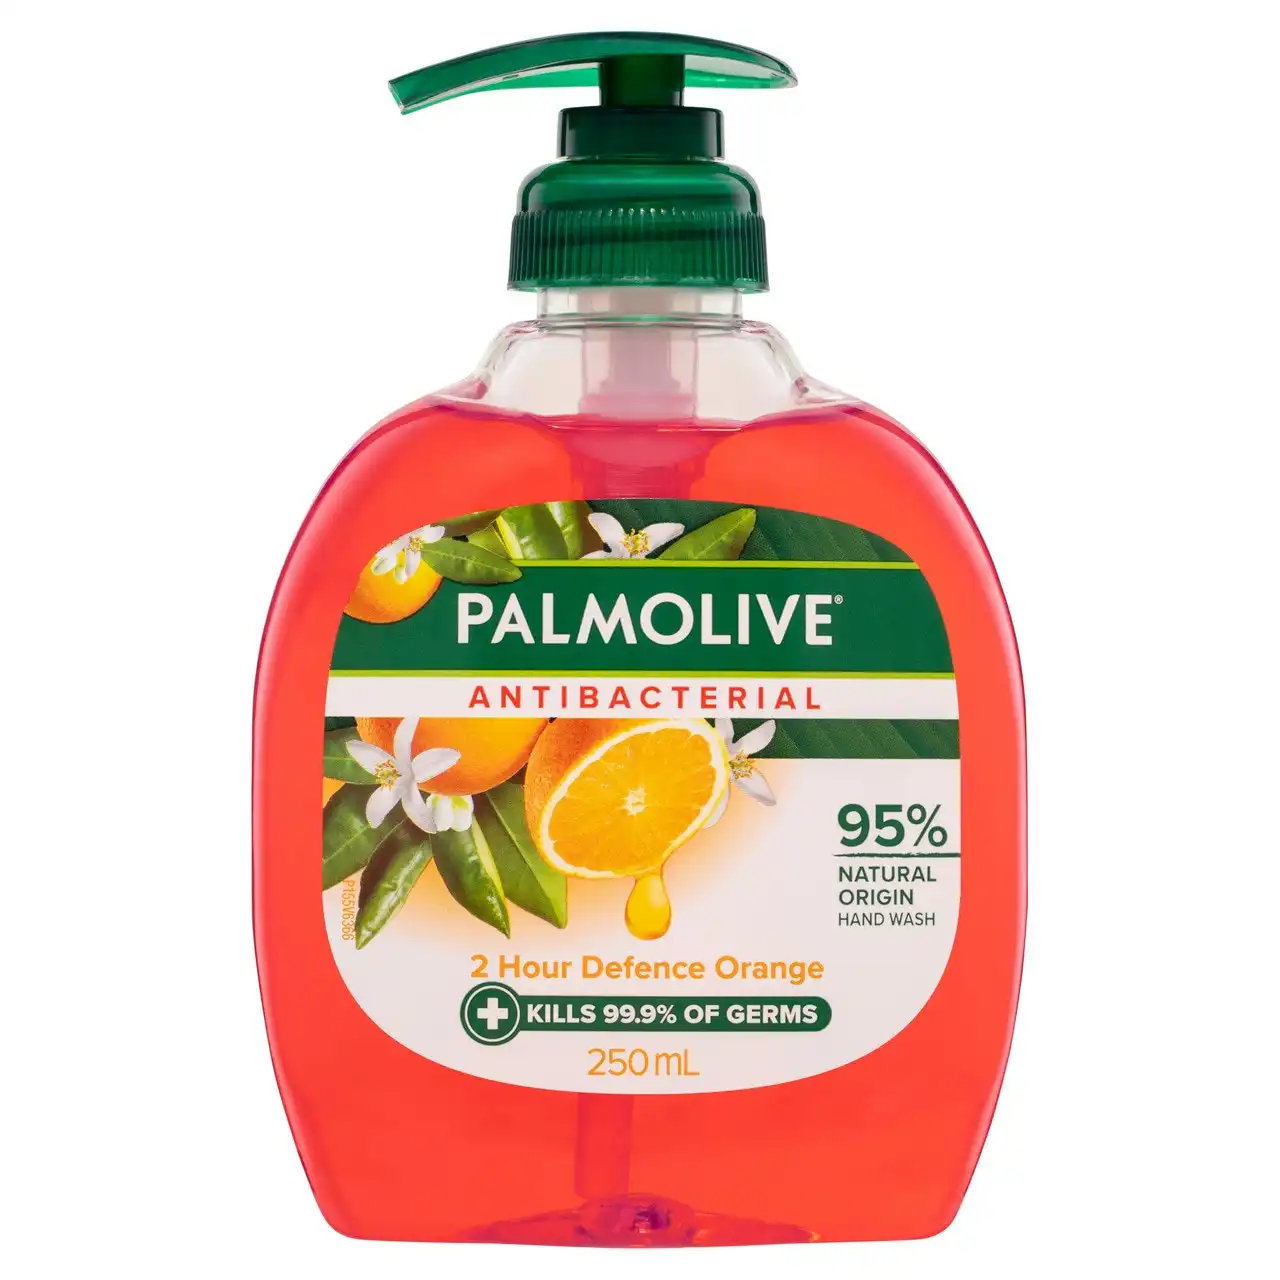 Palmolive Antibacterial Liquid Hand Wash Soap, 250mL, Orange 2 Hour Defence Pump, No Parabens Phthalates or Alcohol